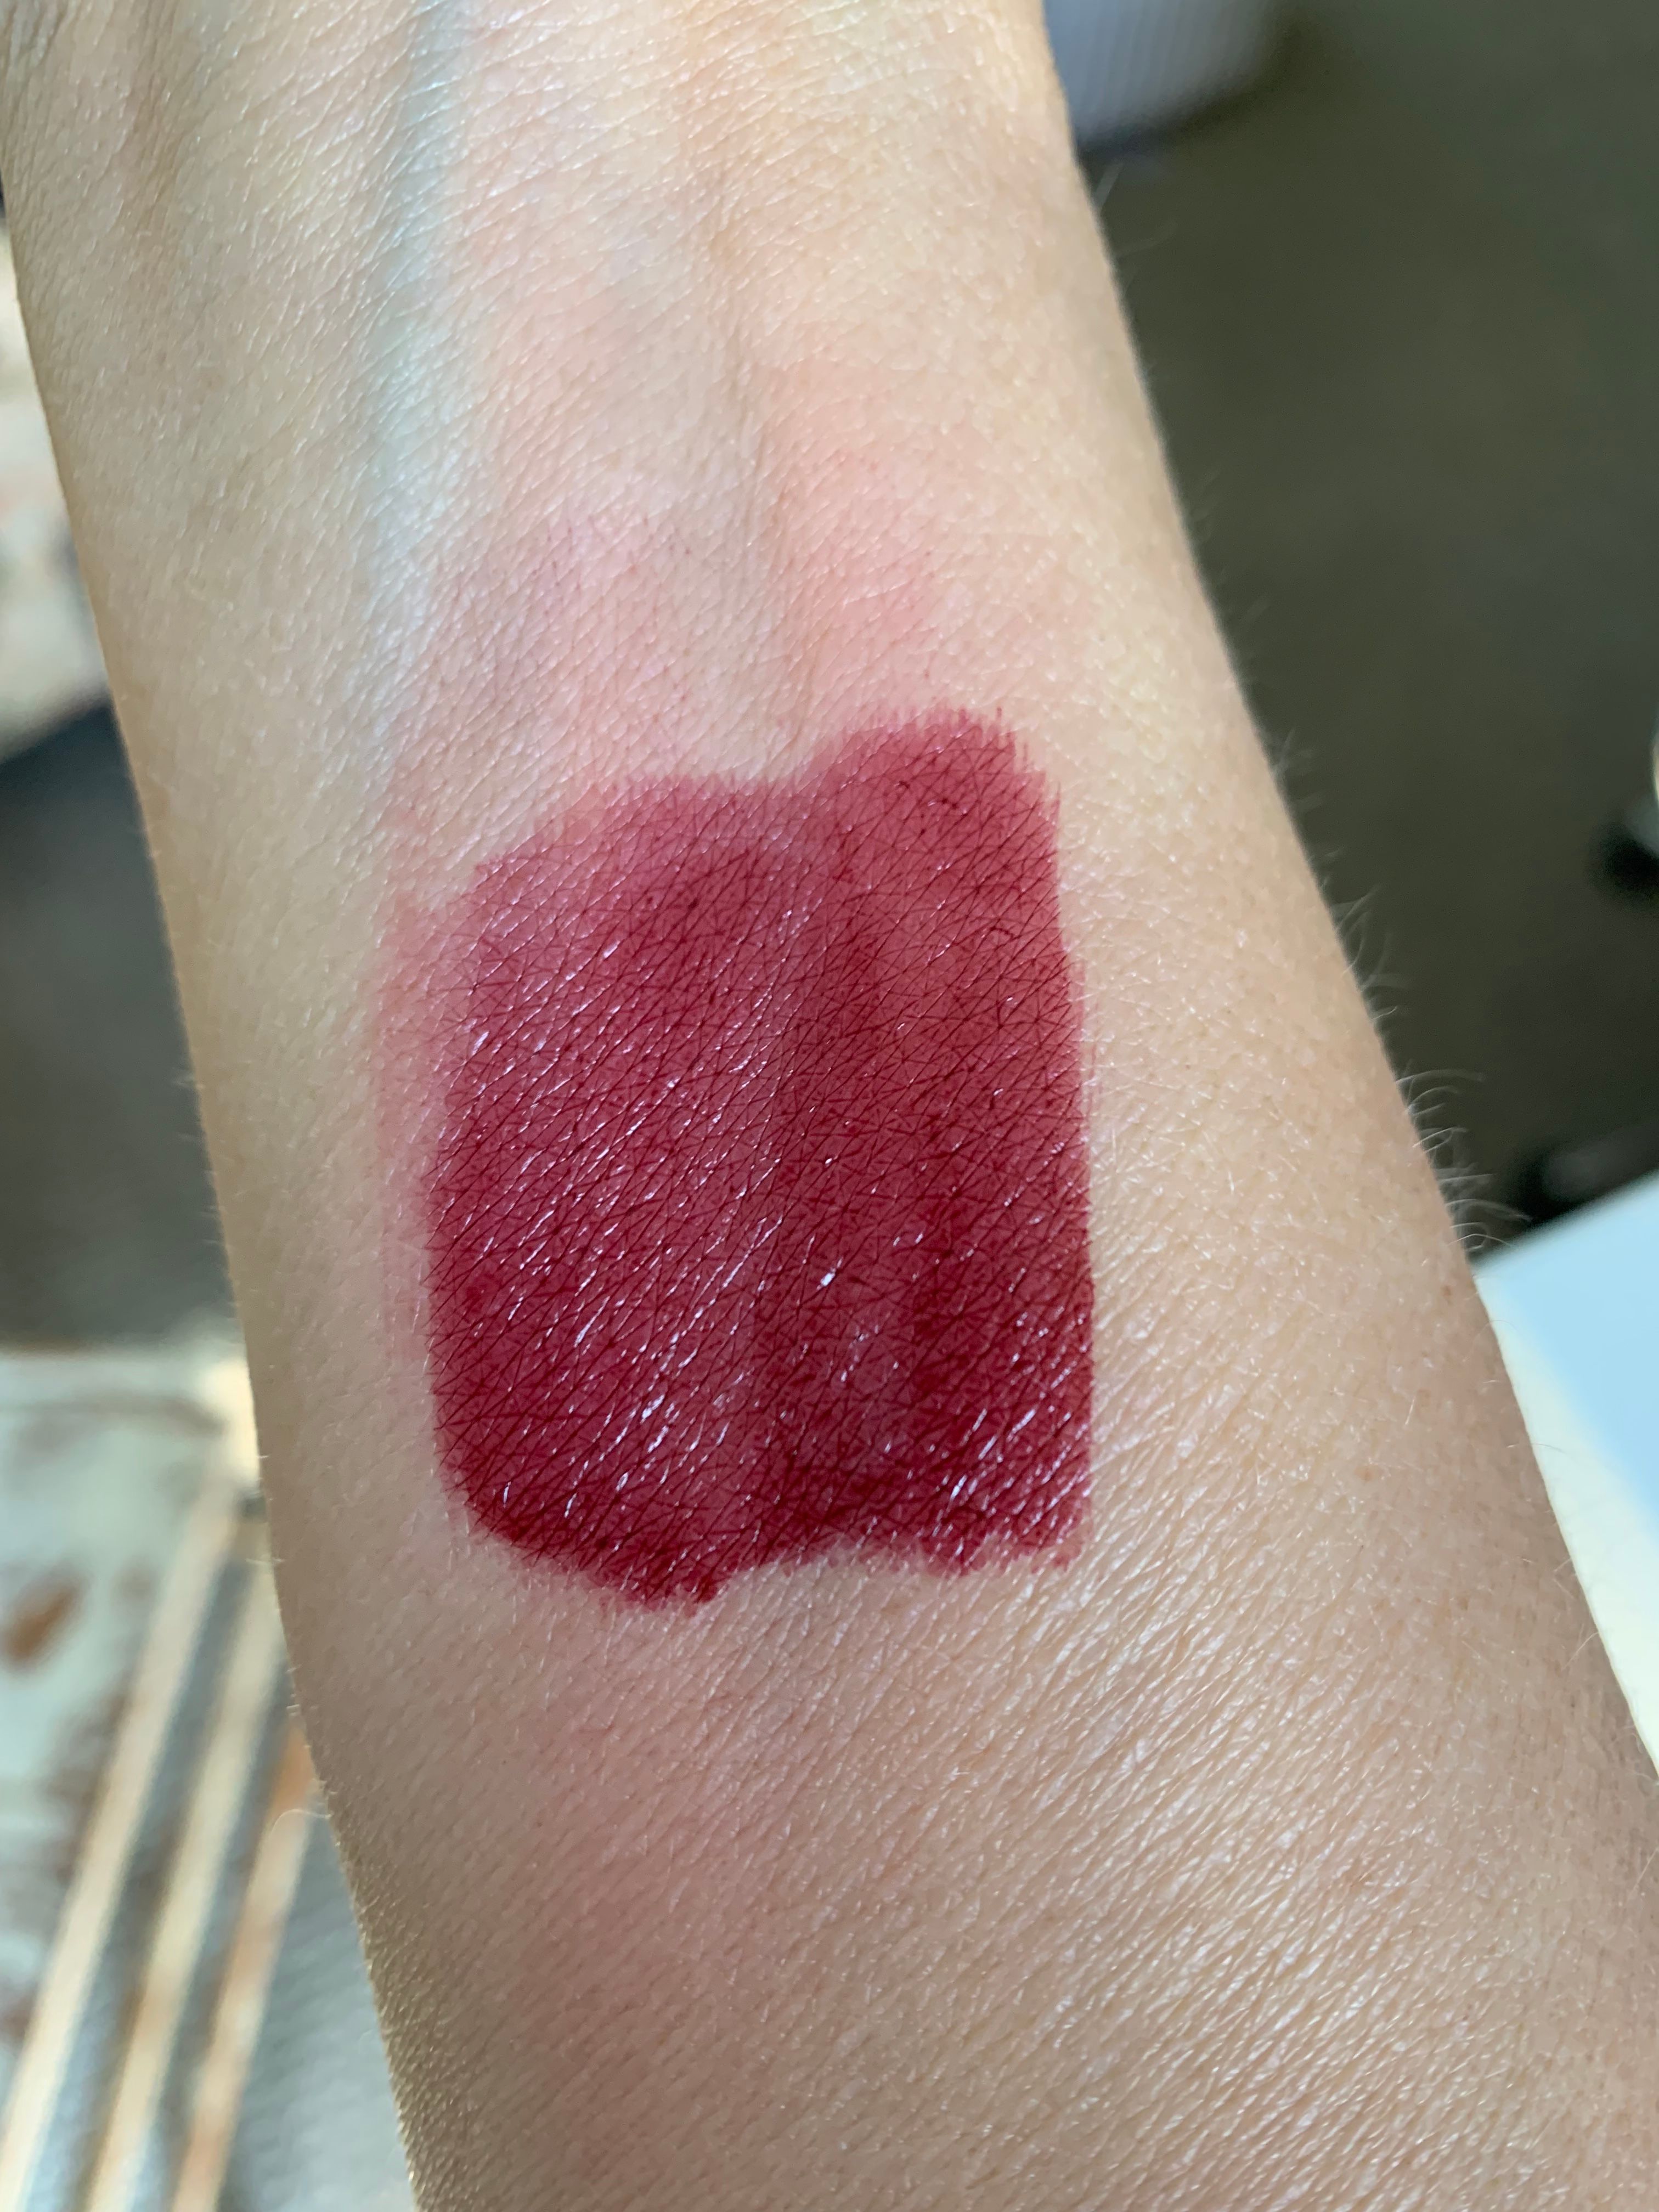 GDSTYLE on X: #GDStyle👉🏻 #Chanel Lipstick Case.($1150) #gdragon #gd   / X